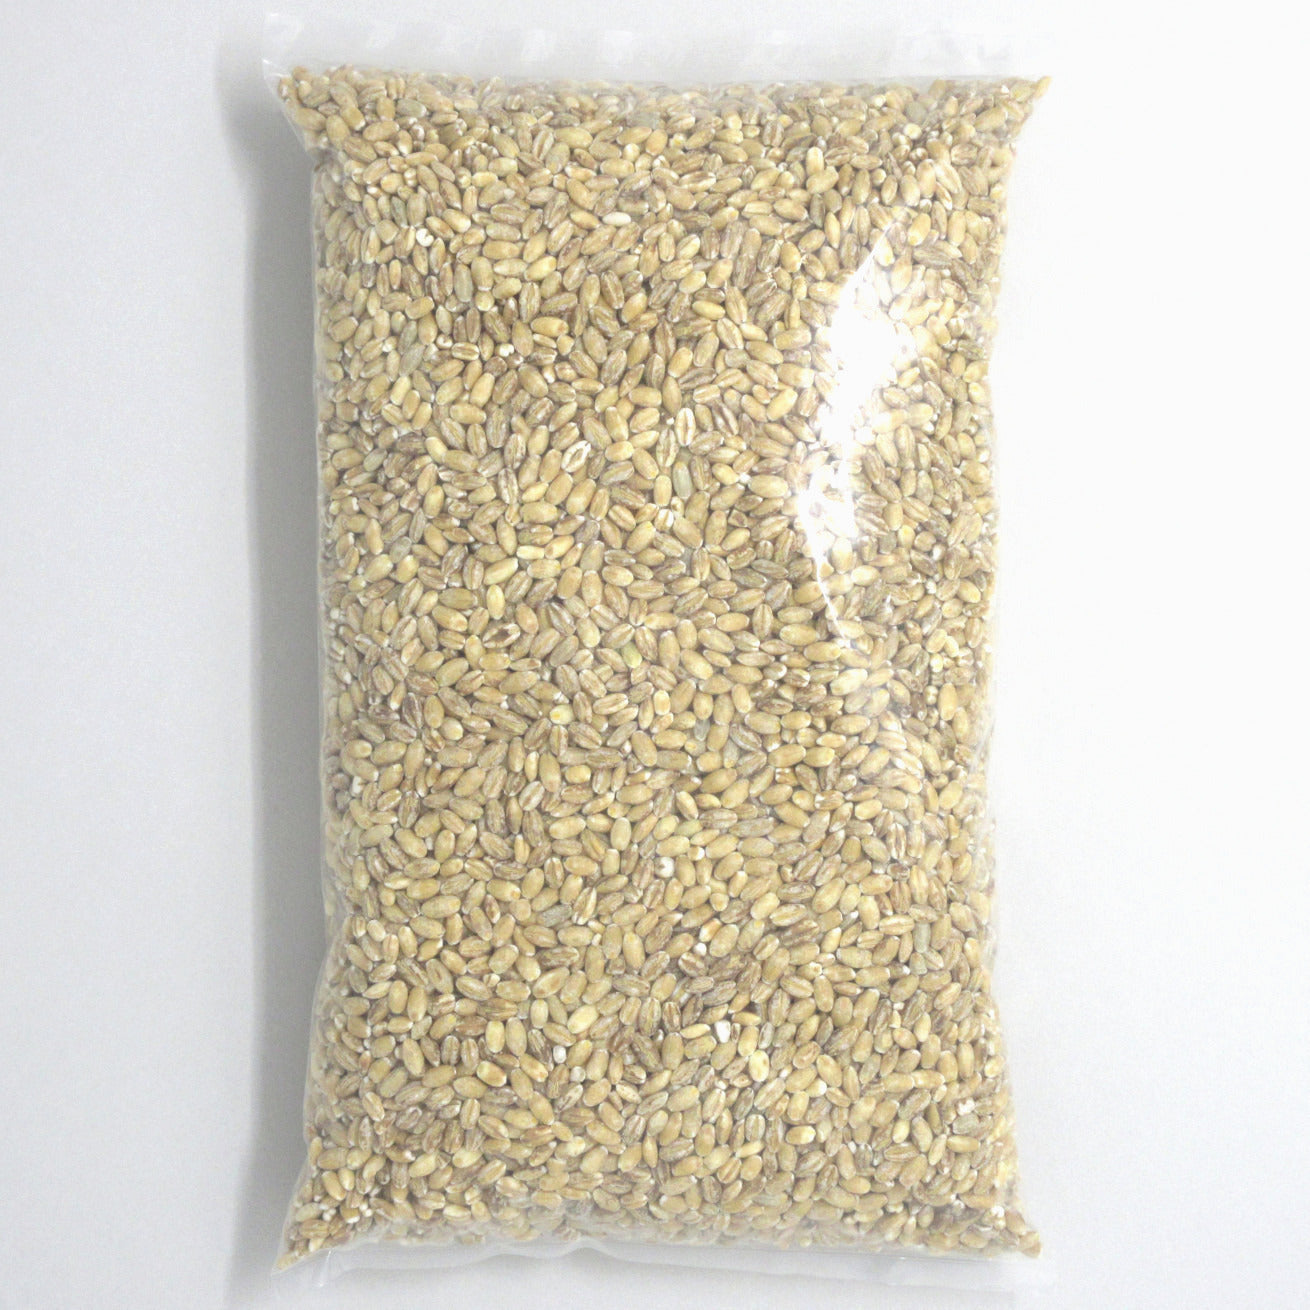 Flour Barrel product image - Pot Barley